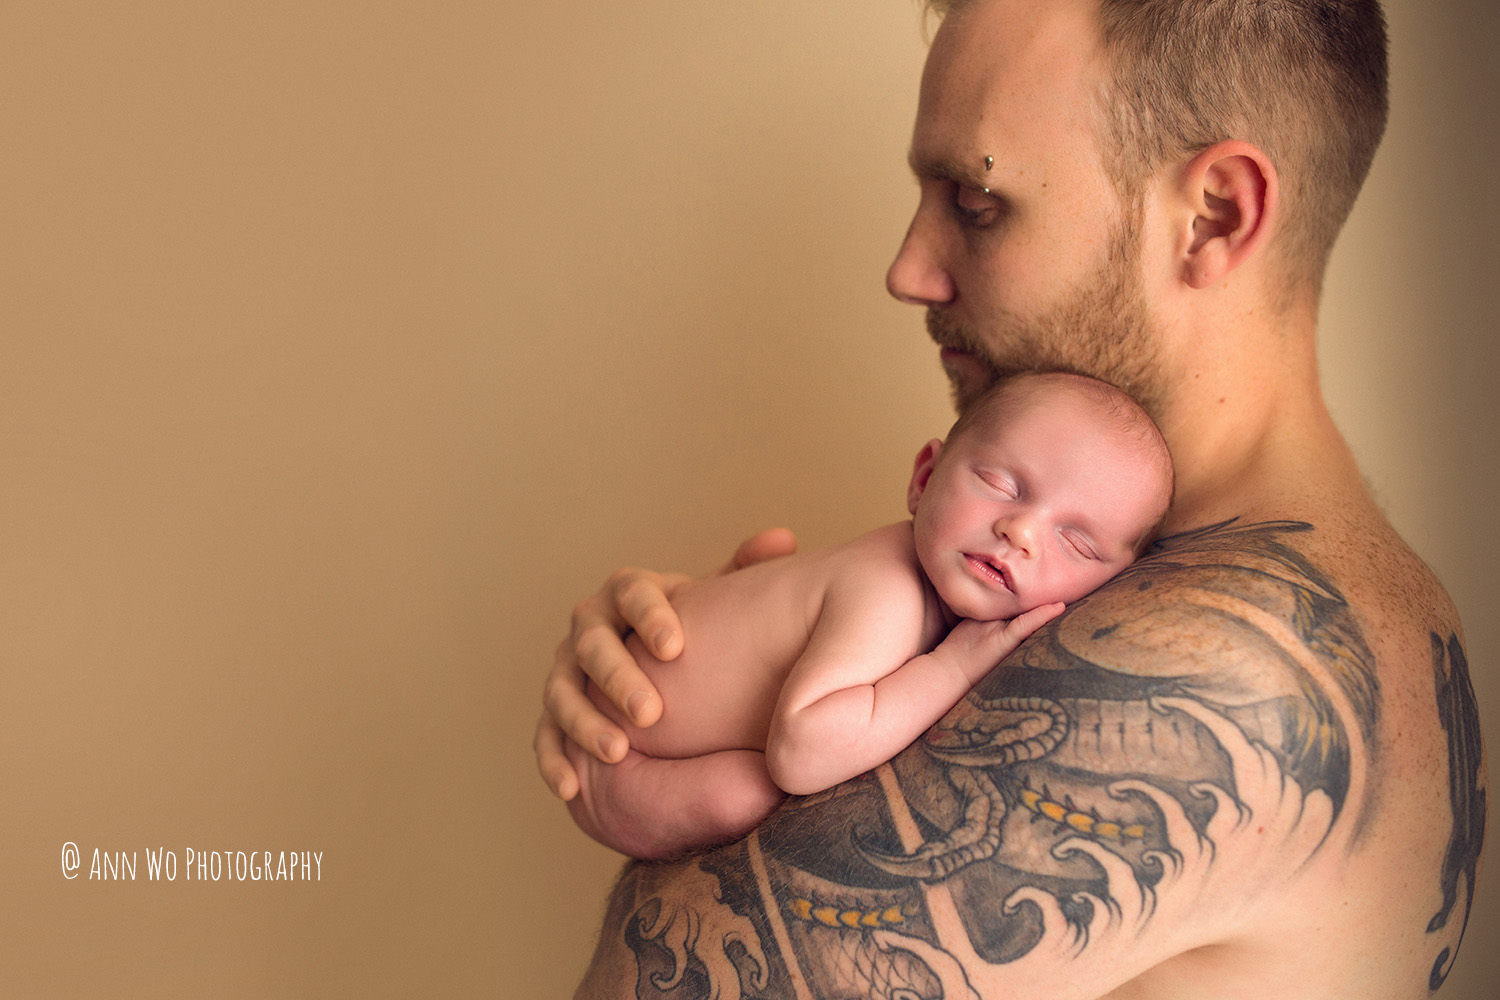 skin-to-skin newborn photography by Ann Wo in London UK